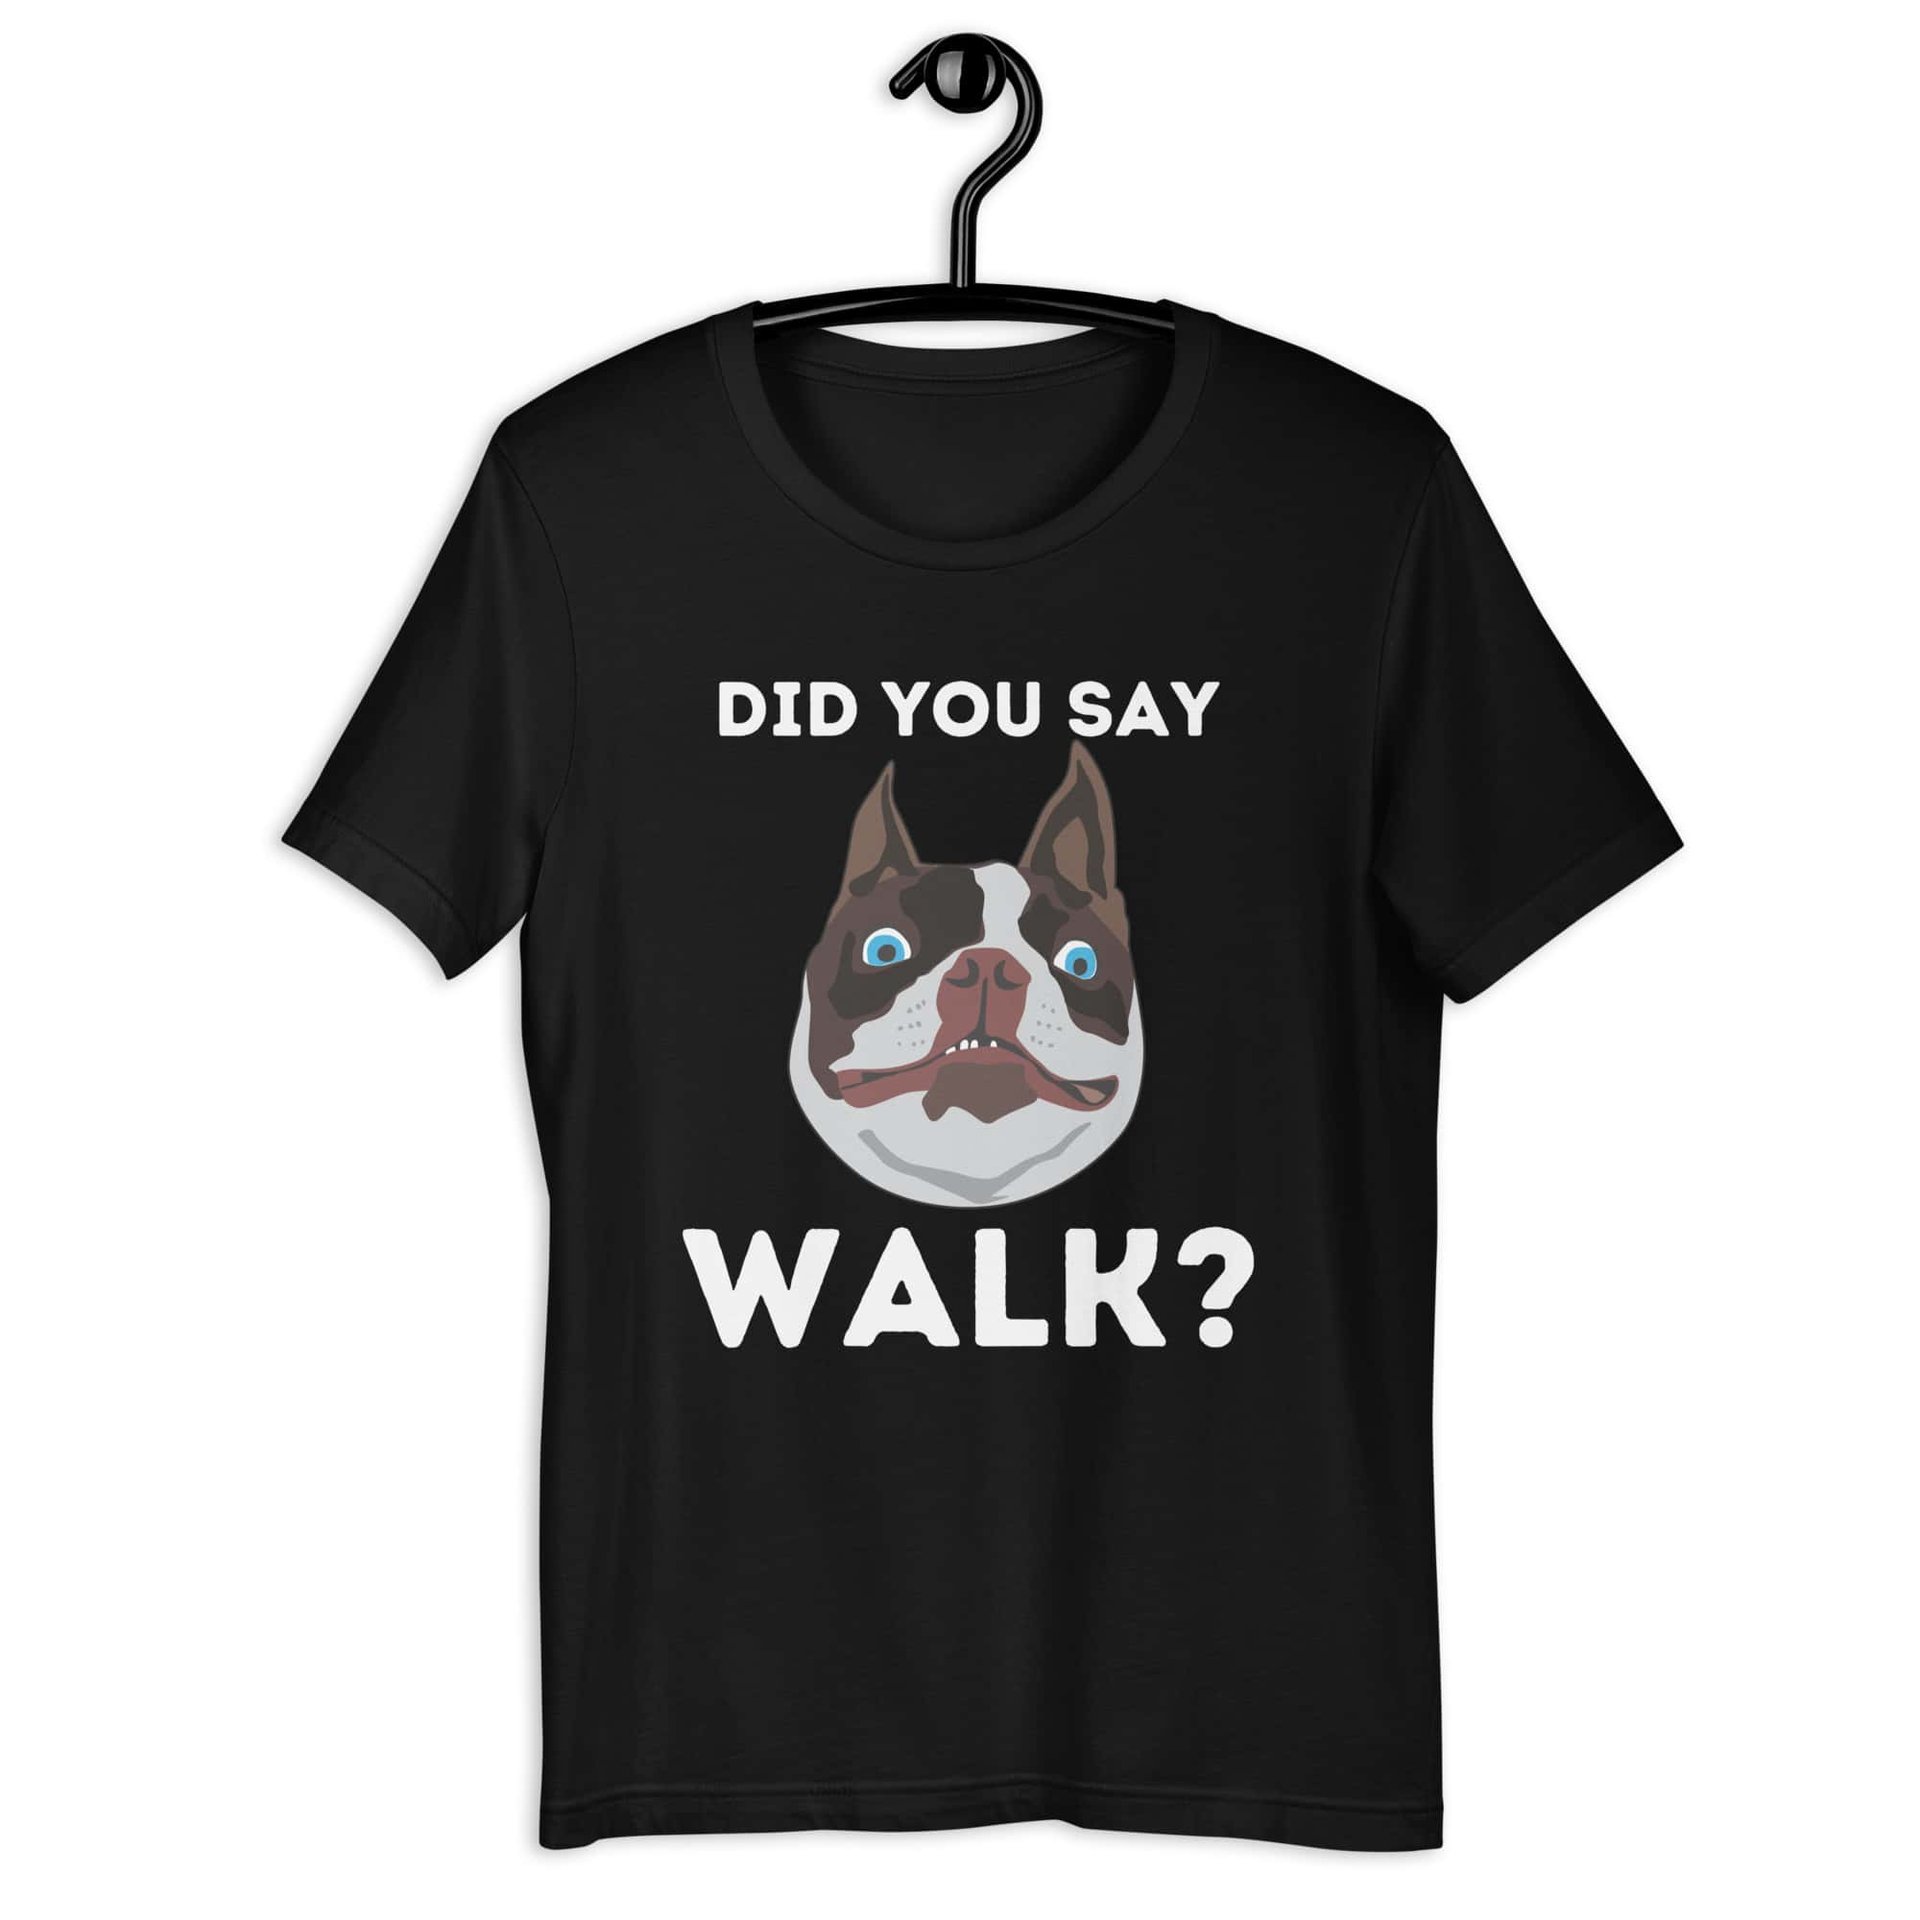 "Did You Say Walk?" Funny Dog Unisex T-Shirt. Black